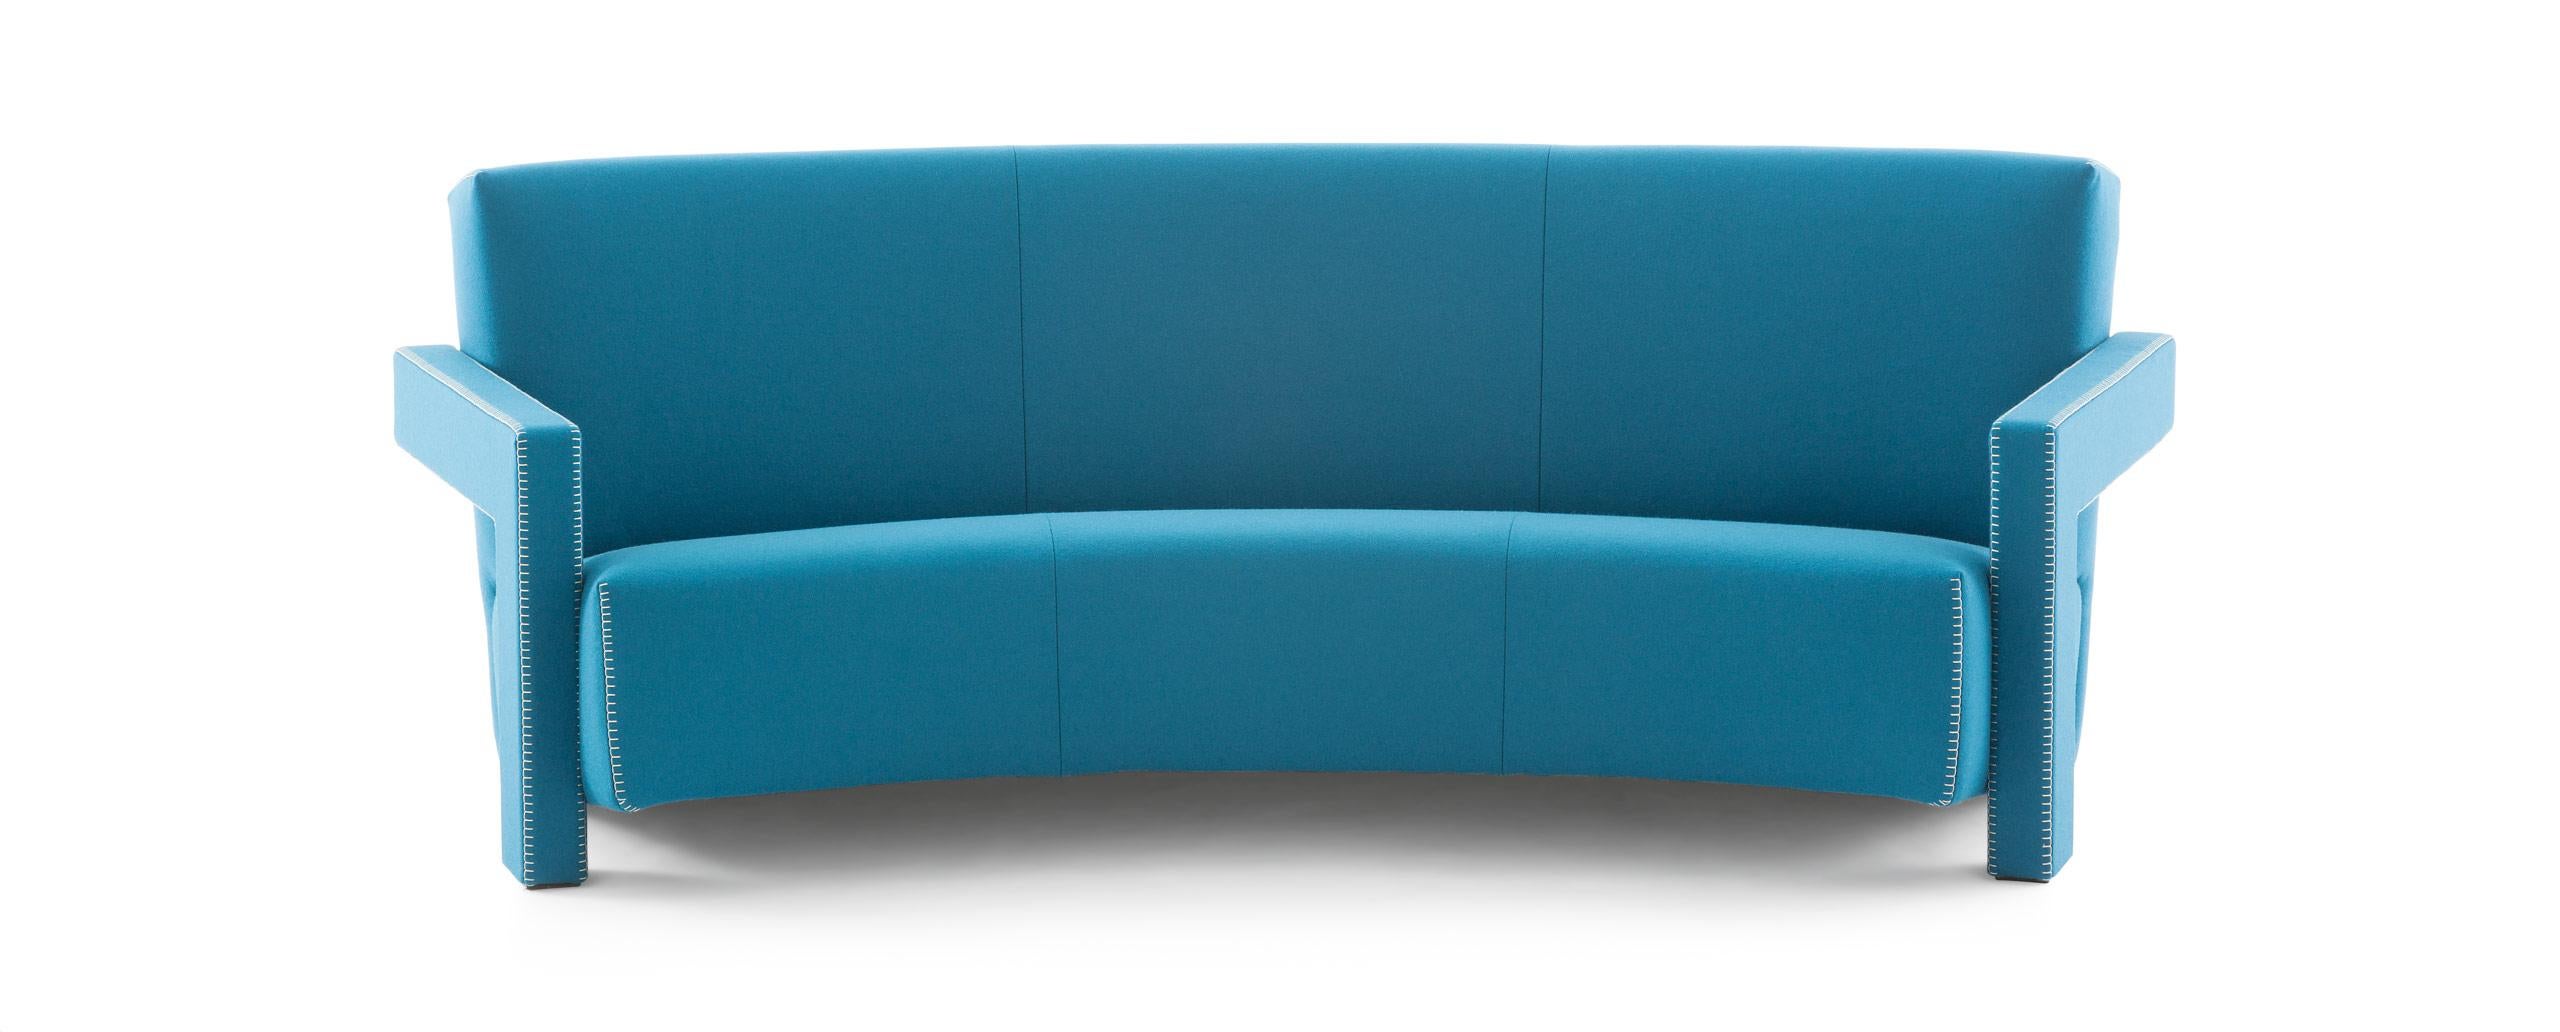 Italian Gerrit Thomas Rietveld Utrech Sofa by Cassina For Sale